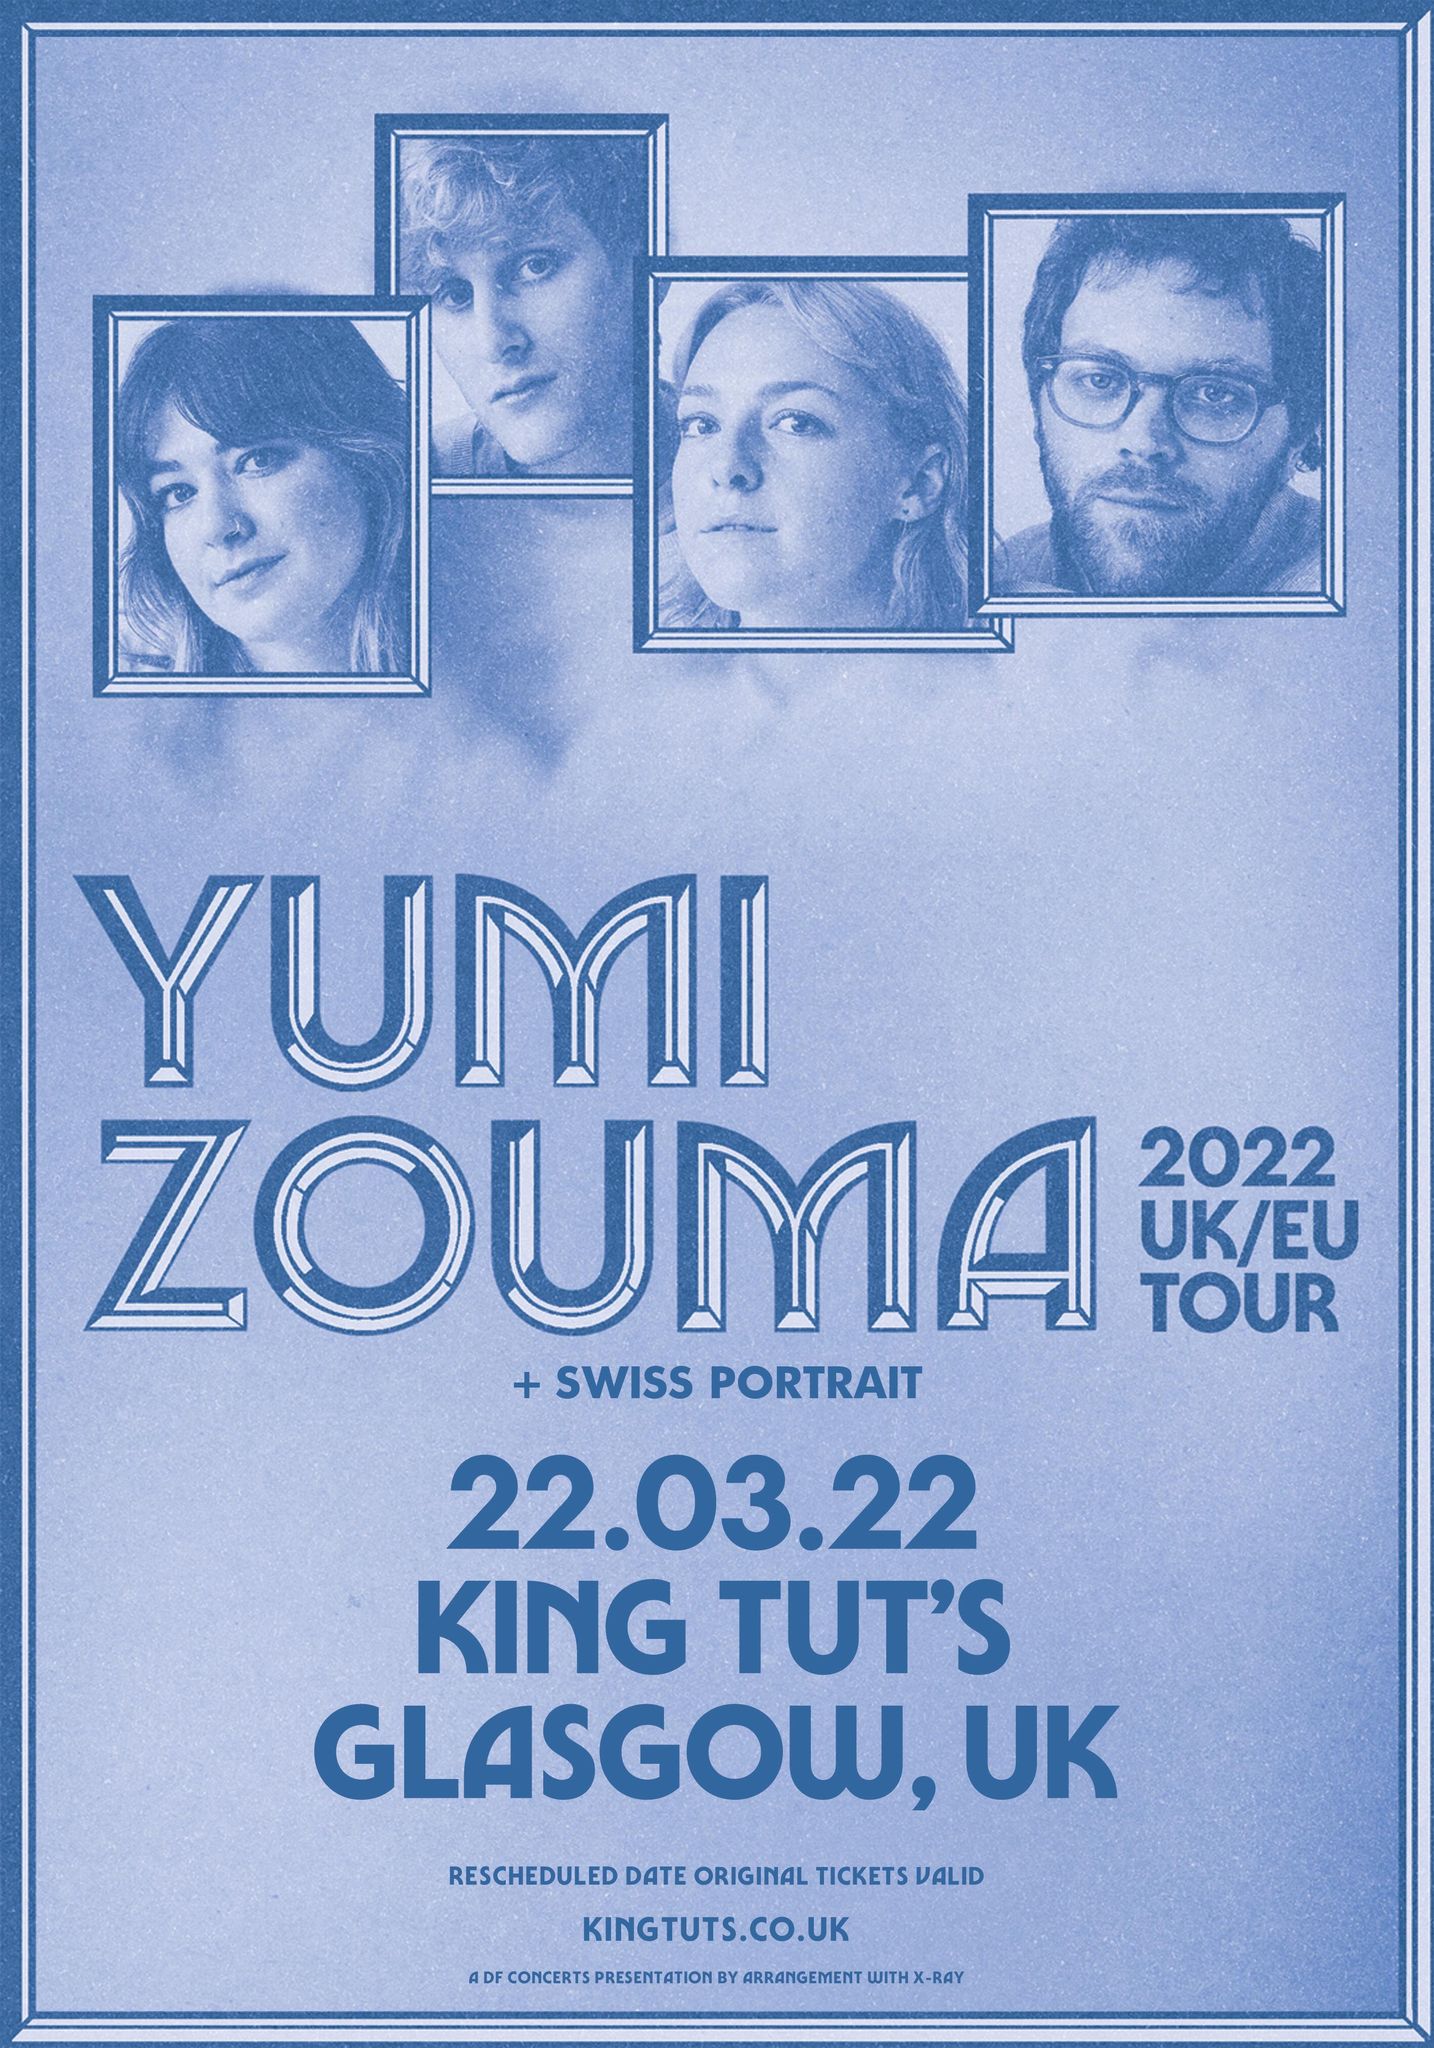 King Tut's 2022 - with Yumi Zouma